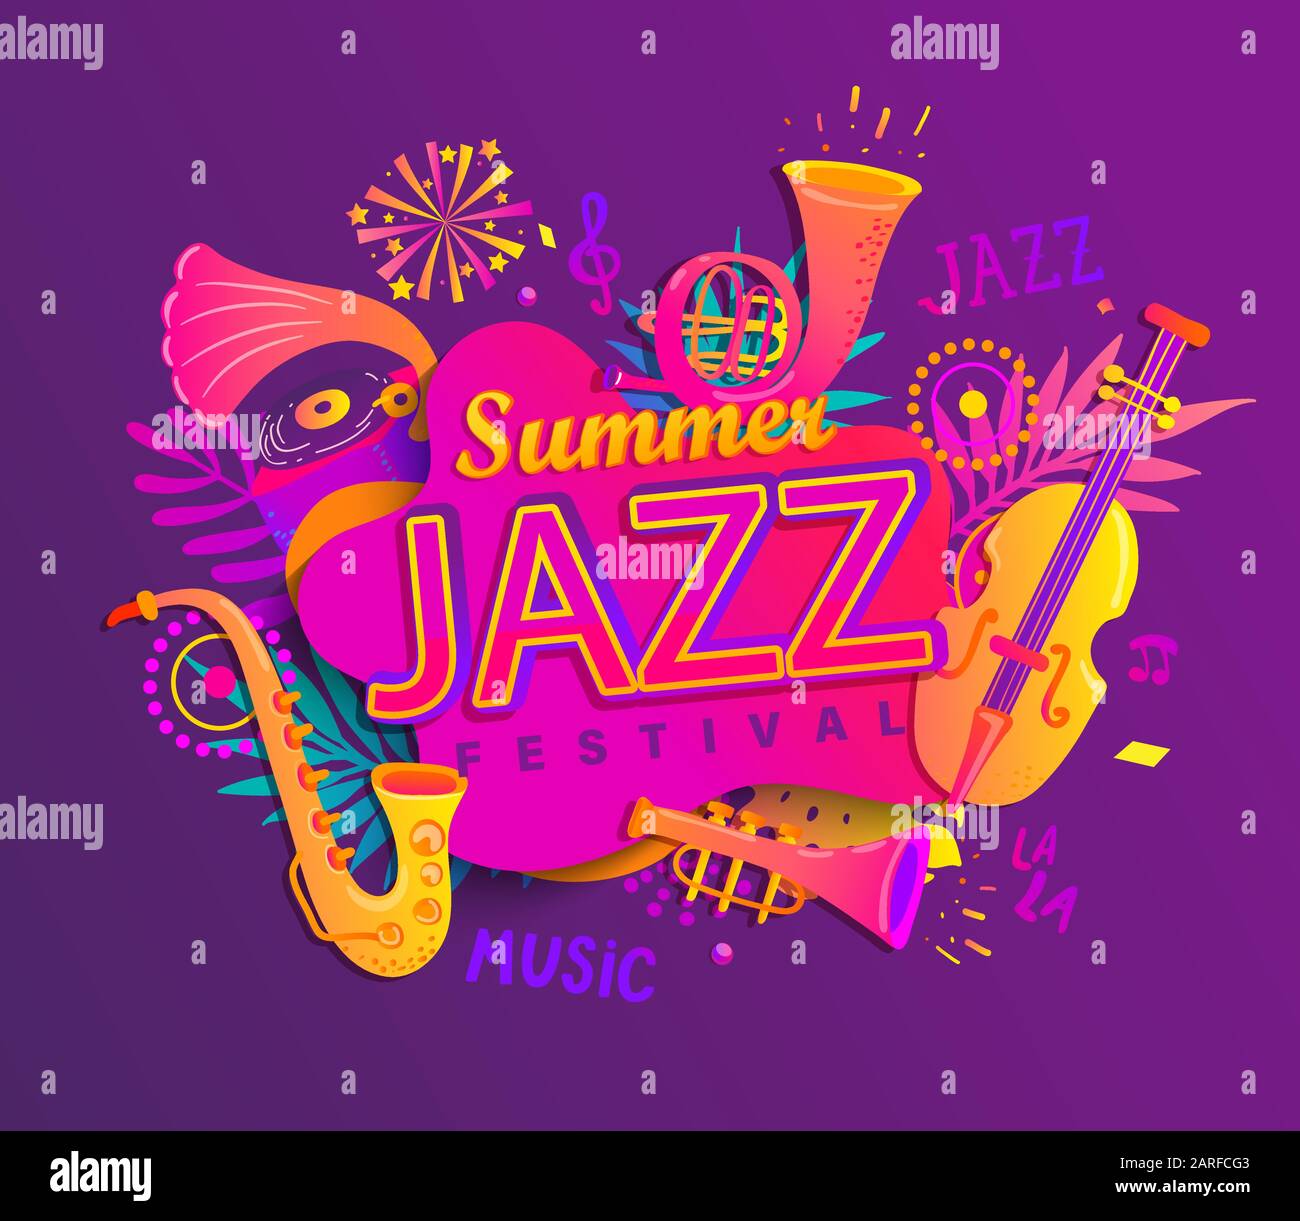 Summer jazz musical festival. Stock Vector